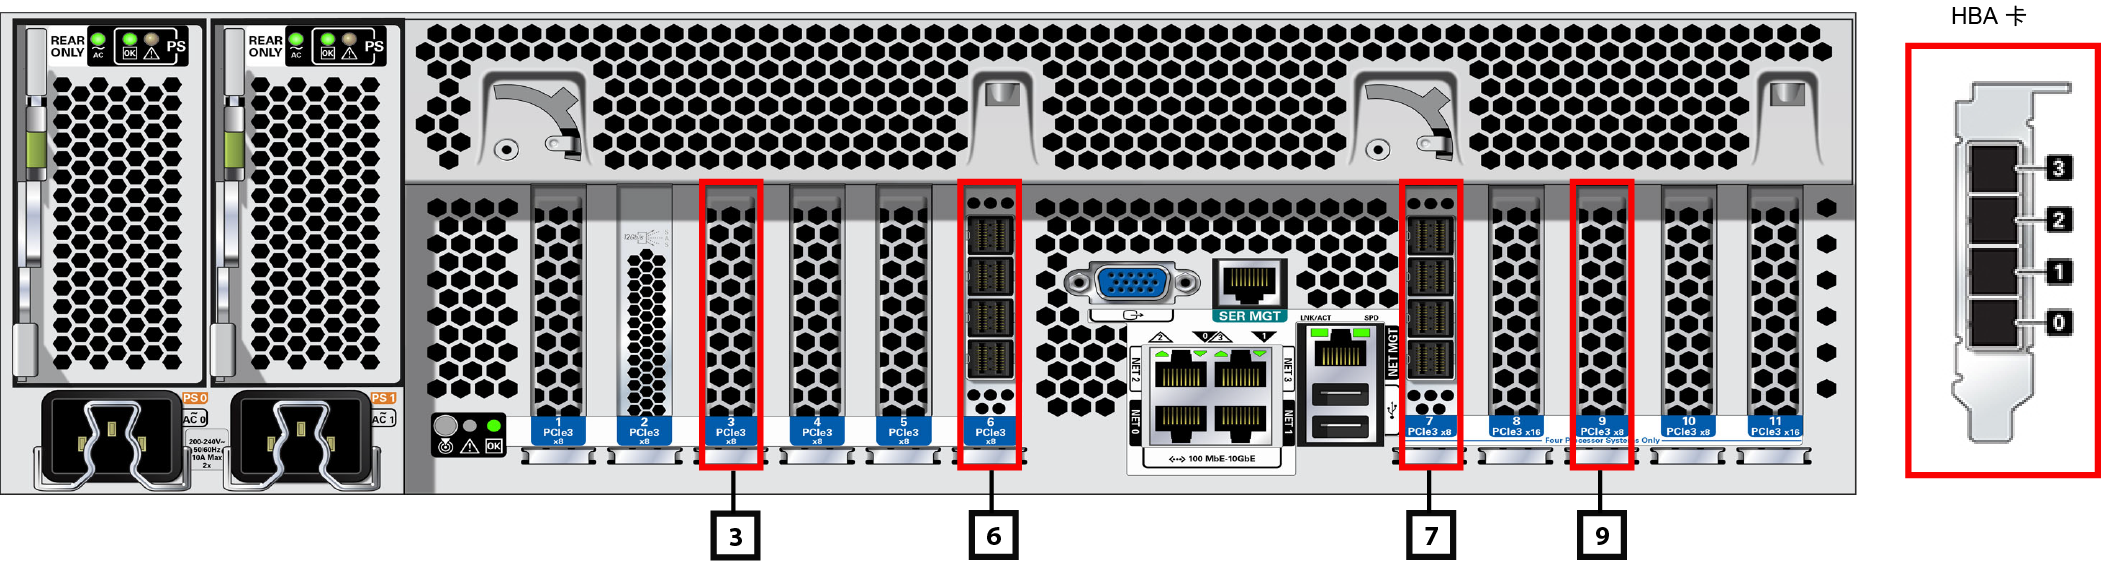 image:此图显示了 ZS5-4 后面板与 HBA 插槽编号。